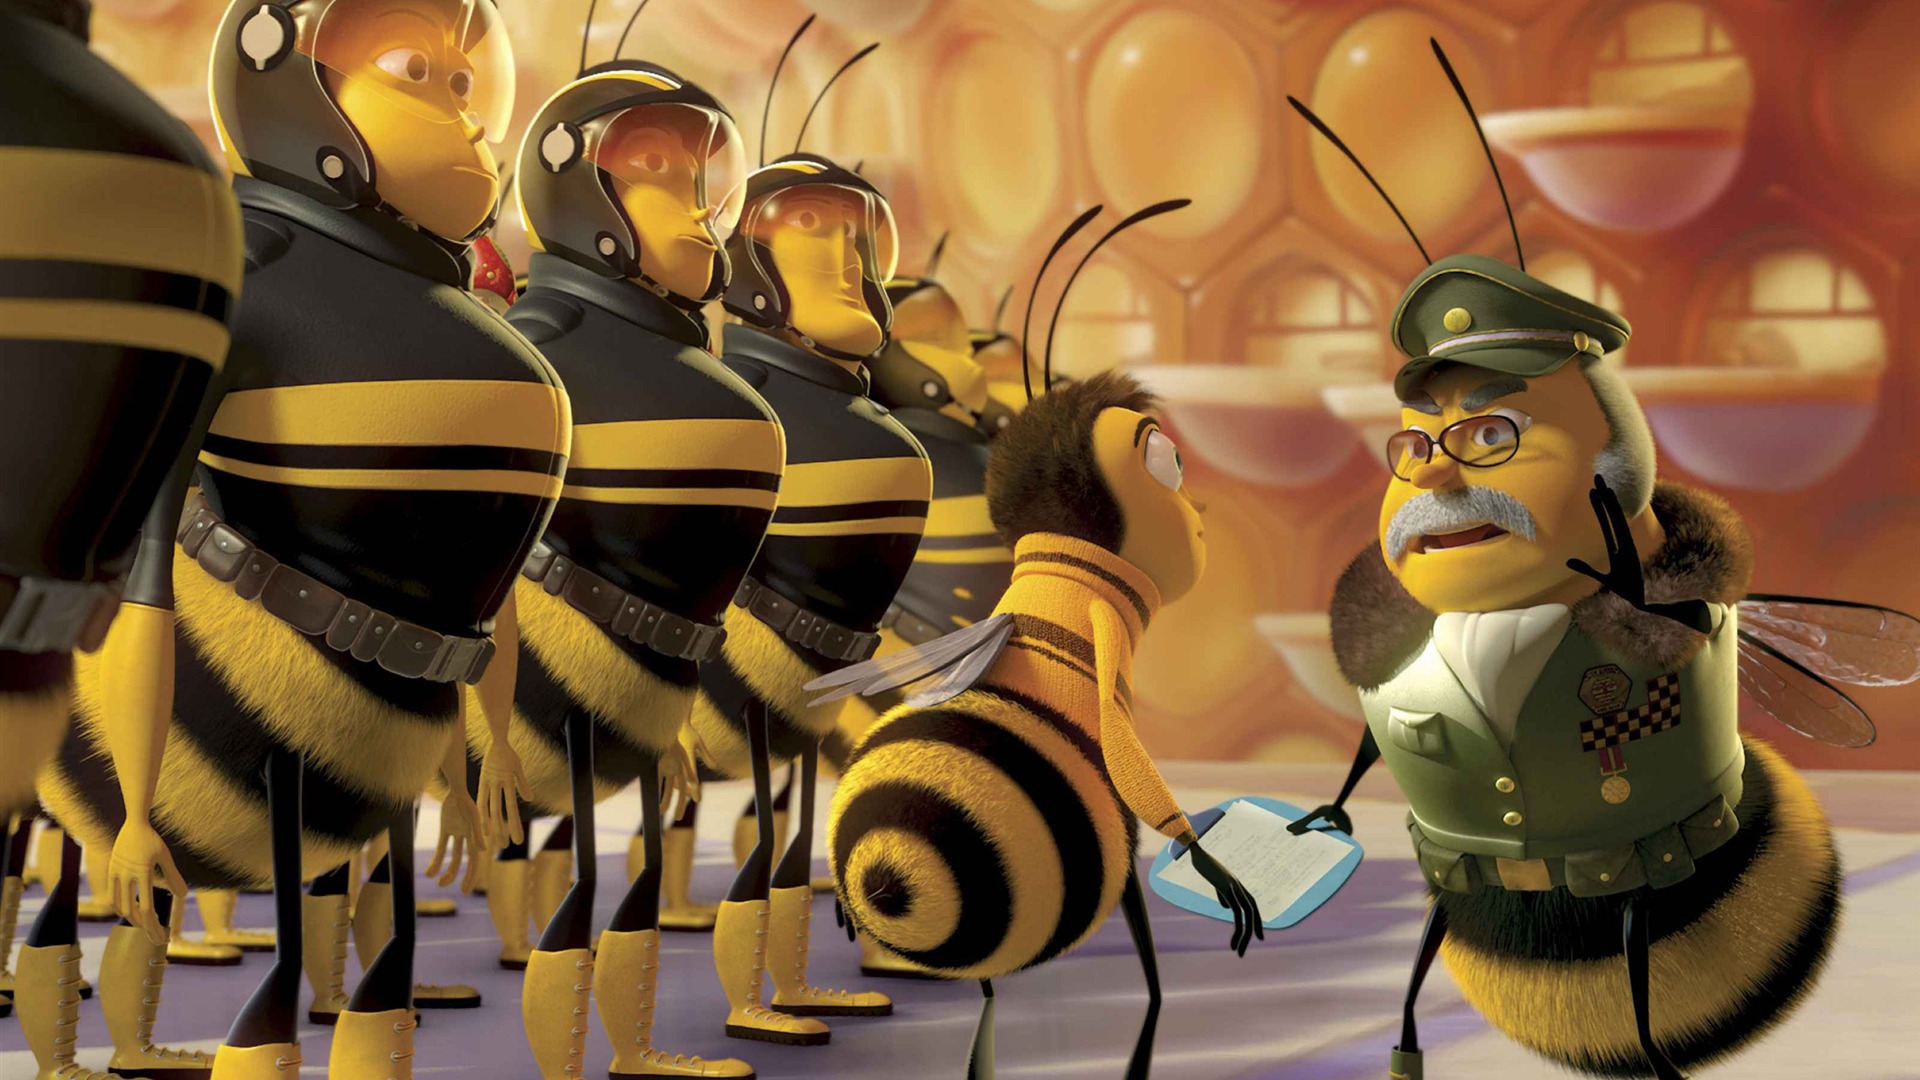 bee movie wallpaper